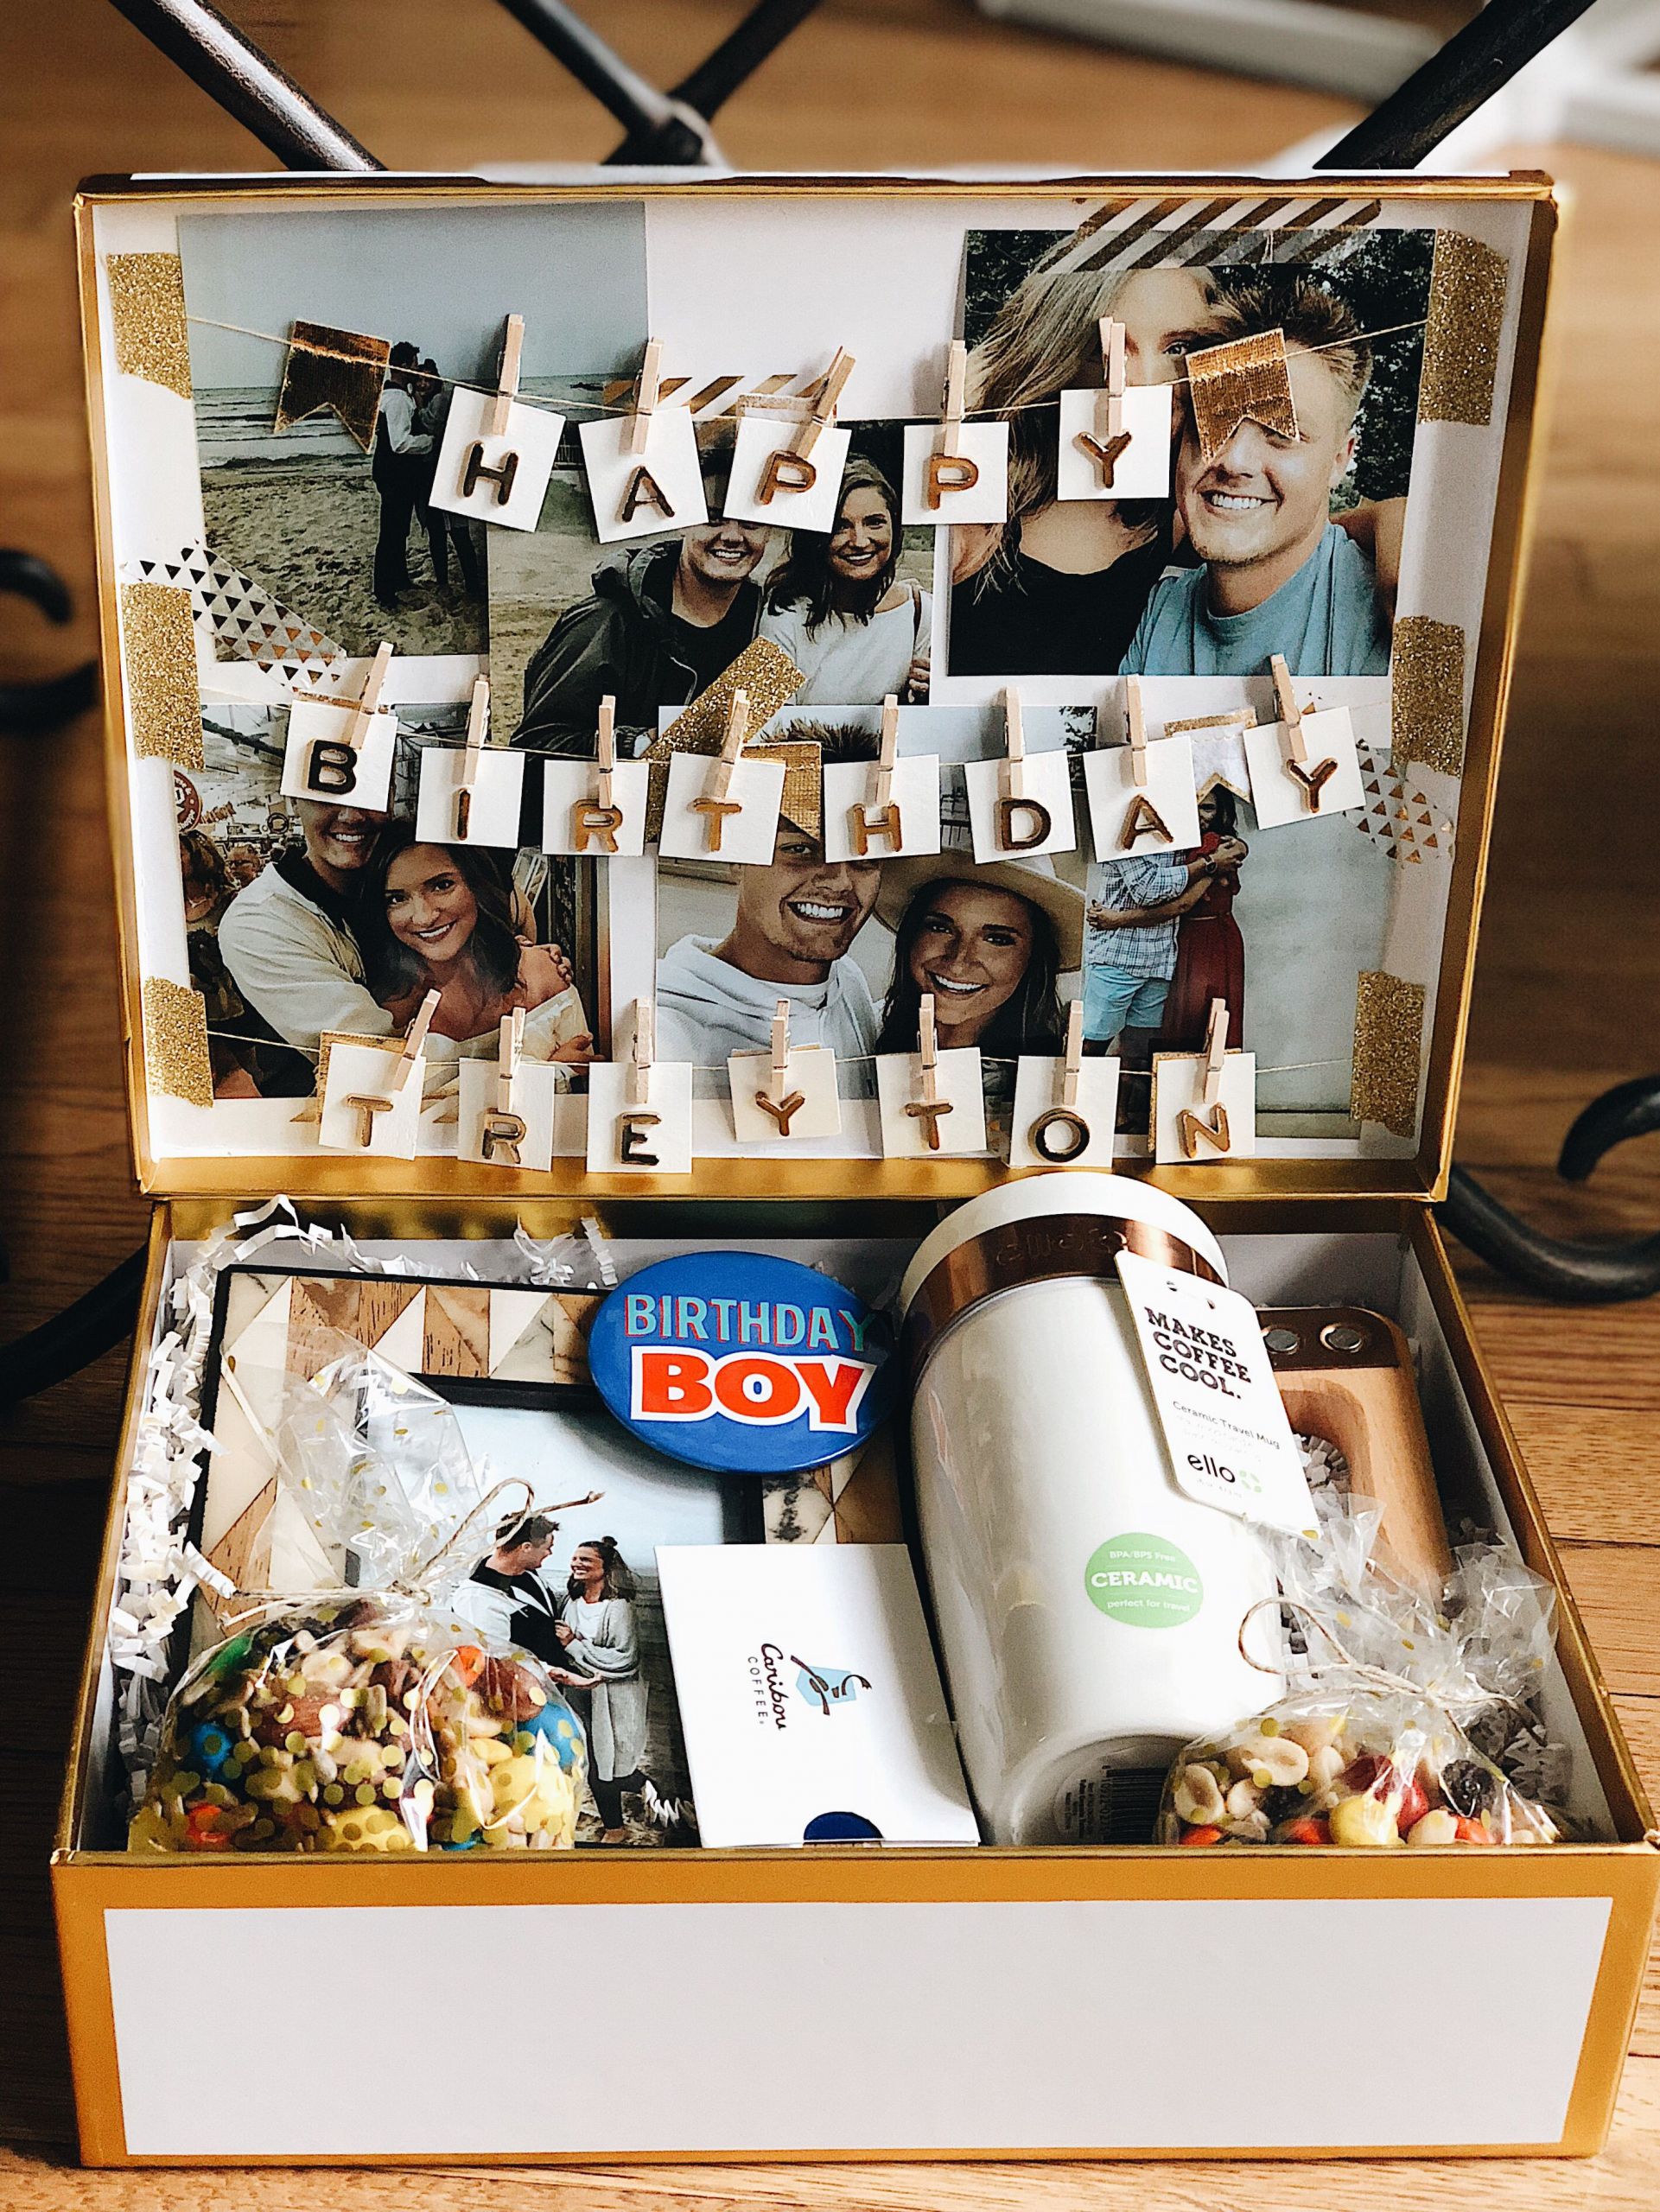 Creative Gift Ideas For Boyfriend
 Long Distance Birthday Box for Boyfriend